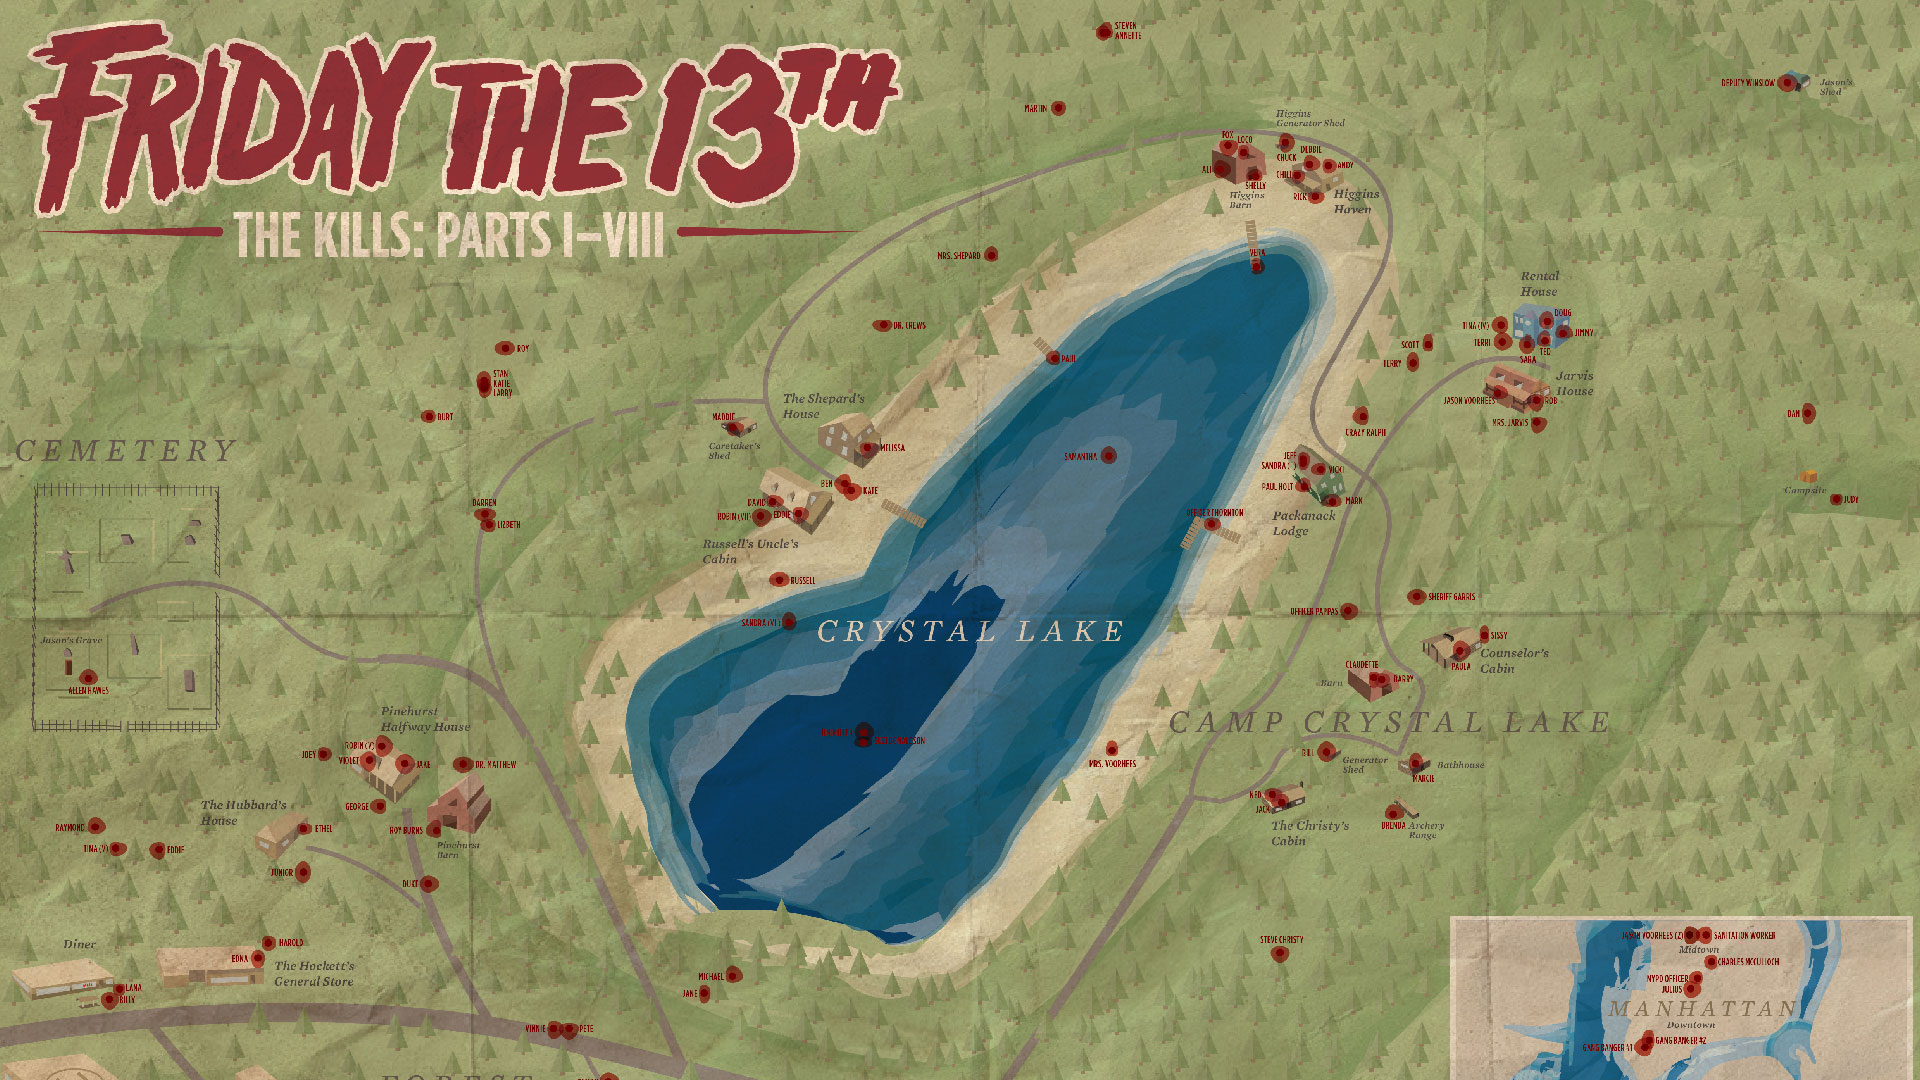 Friday the 13th kills map